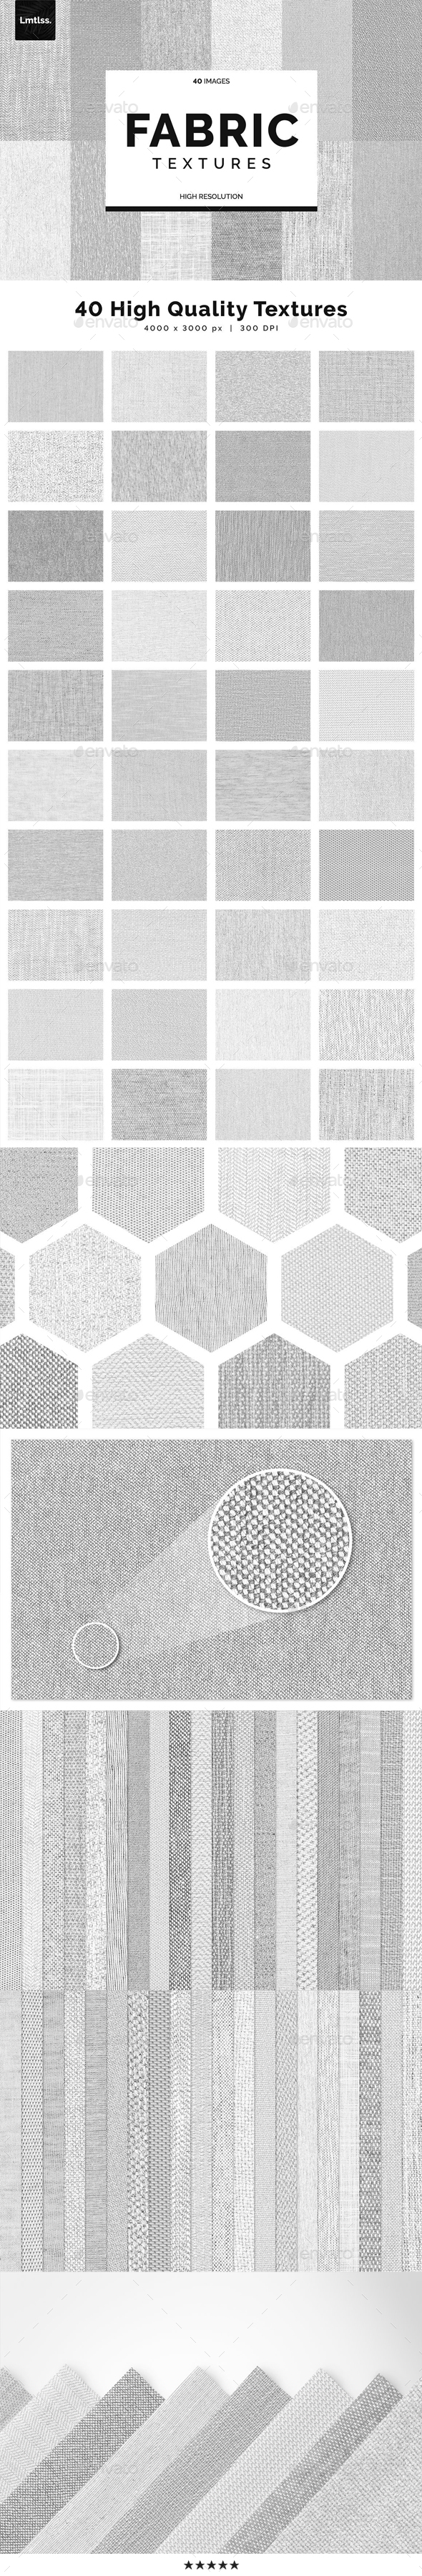 [DOWNLOAD]40 Fabric Textures